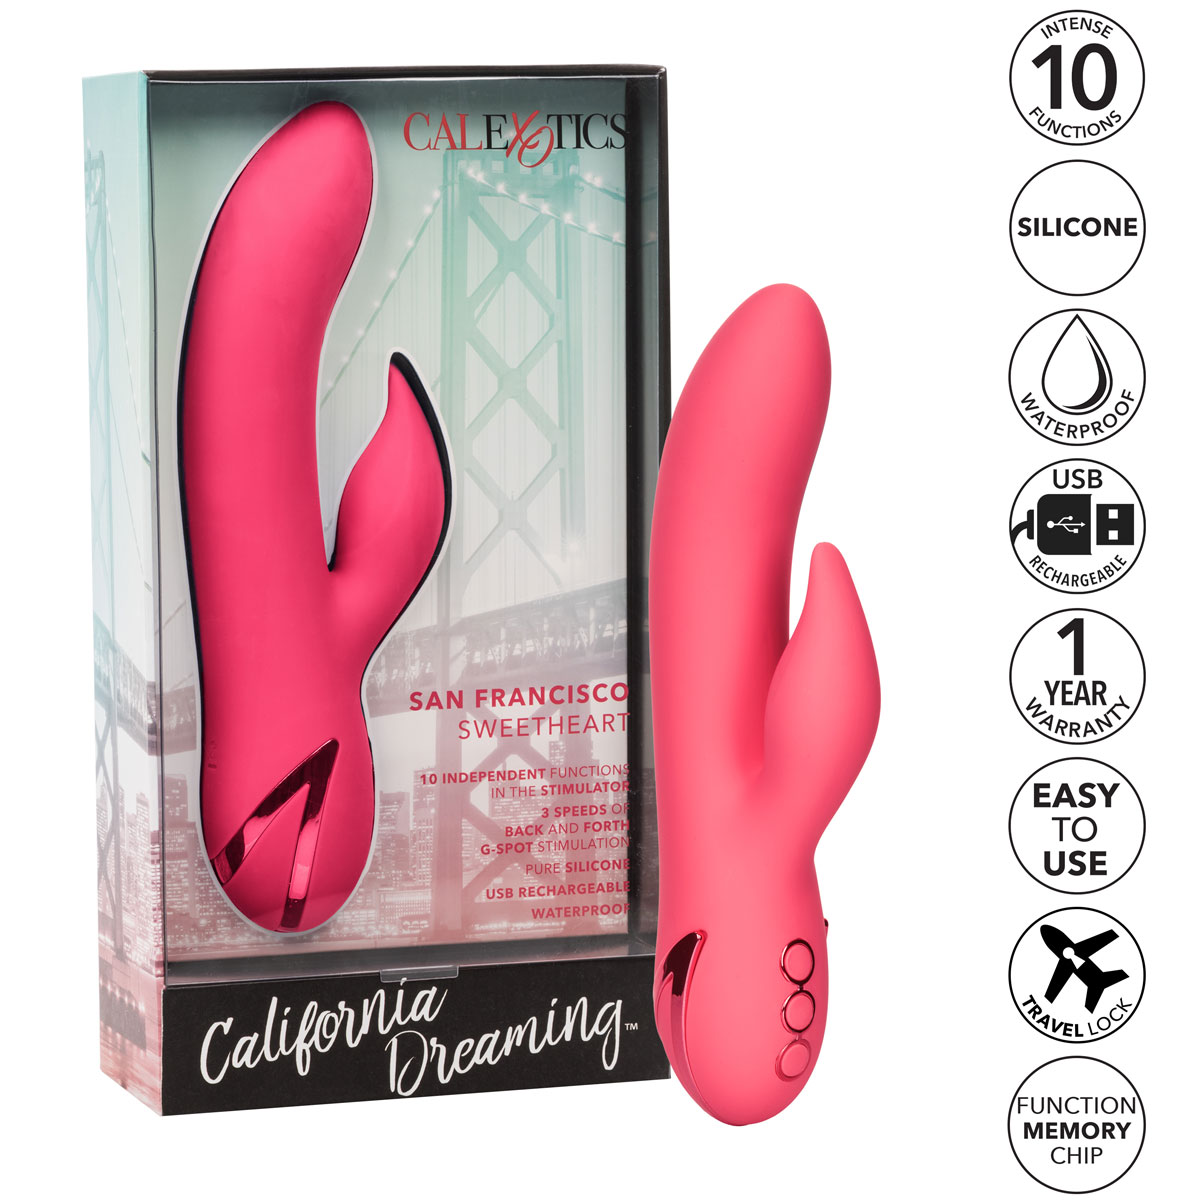 California Dreaming San Francisco Sweetheart Rabbit Style Silicone Vibrator - Features